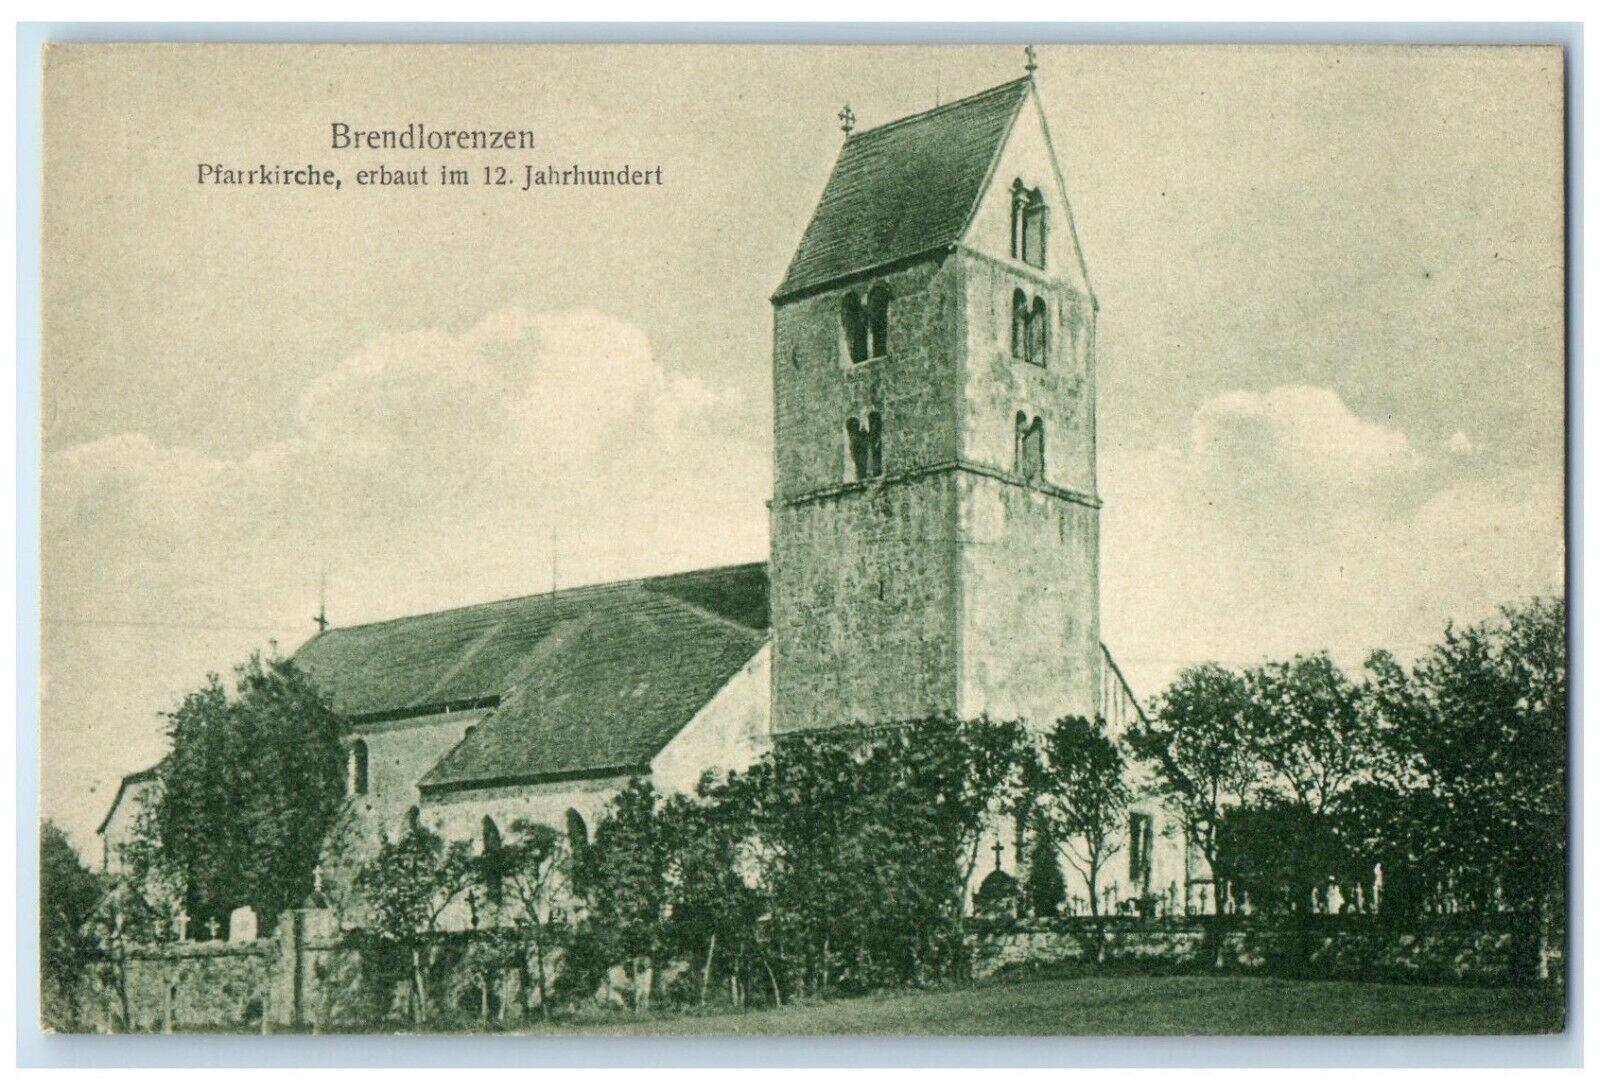 c1910 Brendlorenzen Parish Church Built in the 12th Century Germany Postcard